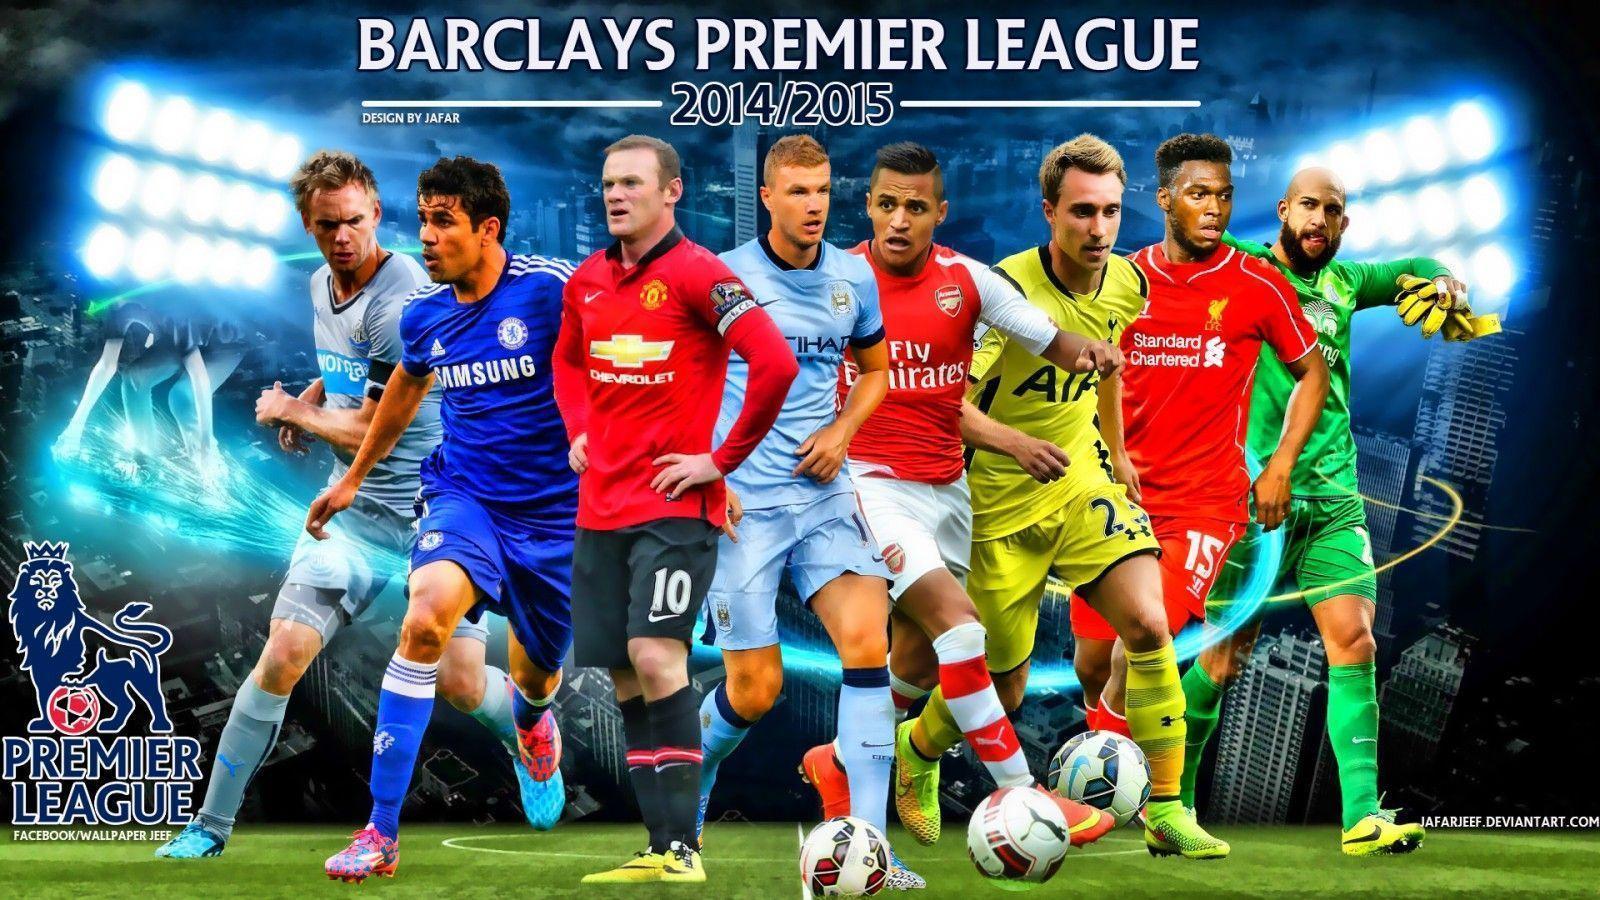 Barclays Premier League 2014 2015 Football Stars Wallpaper Wide Or